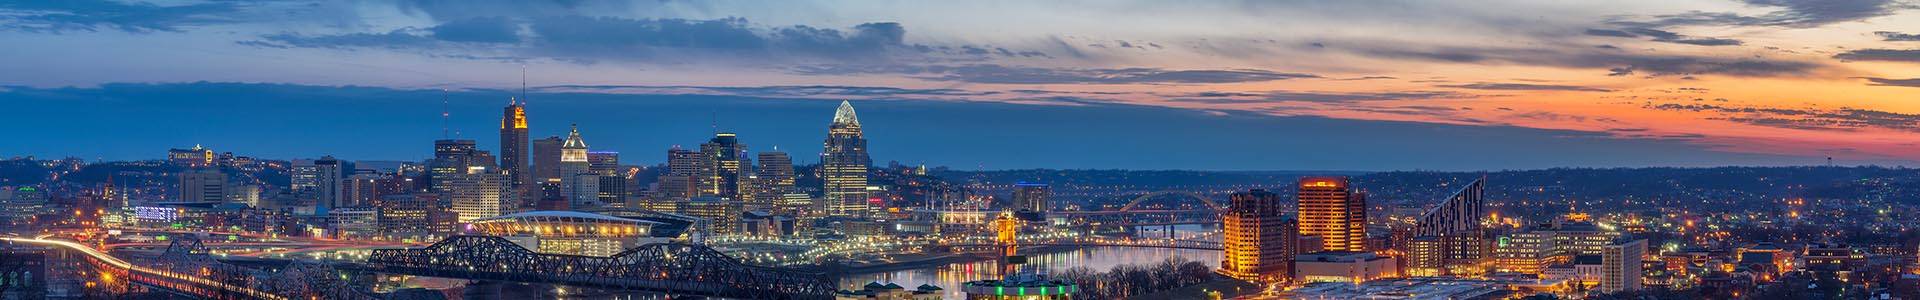 IRR-Cincinnati/Dayton: Insights into the Local Market